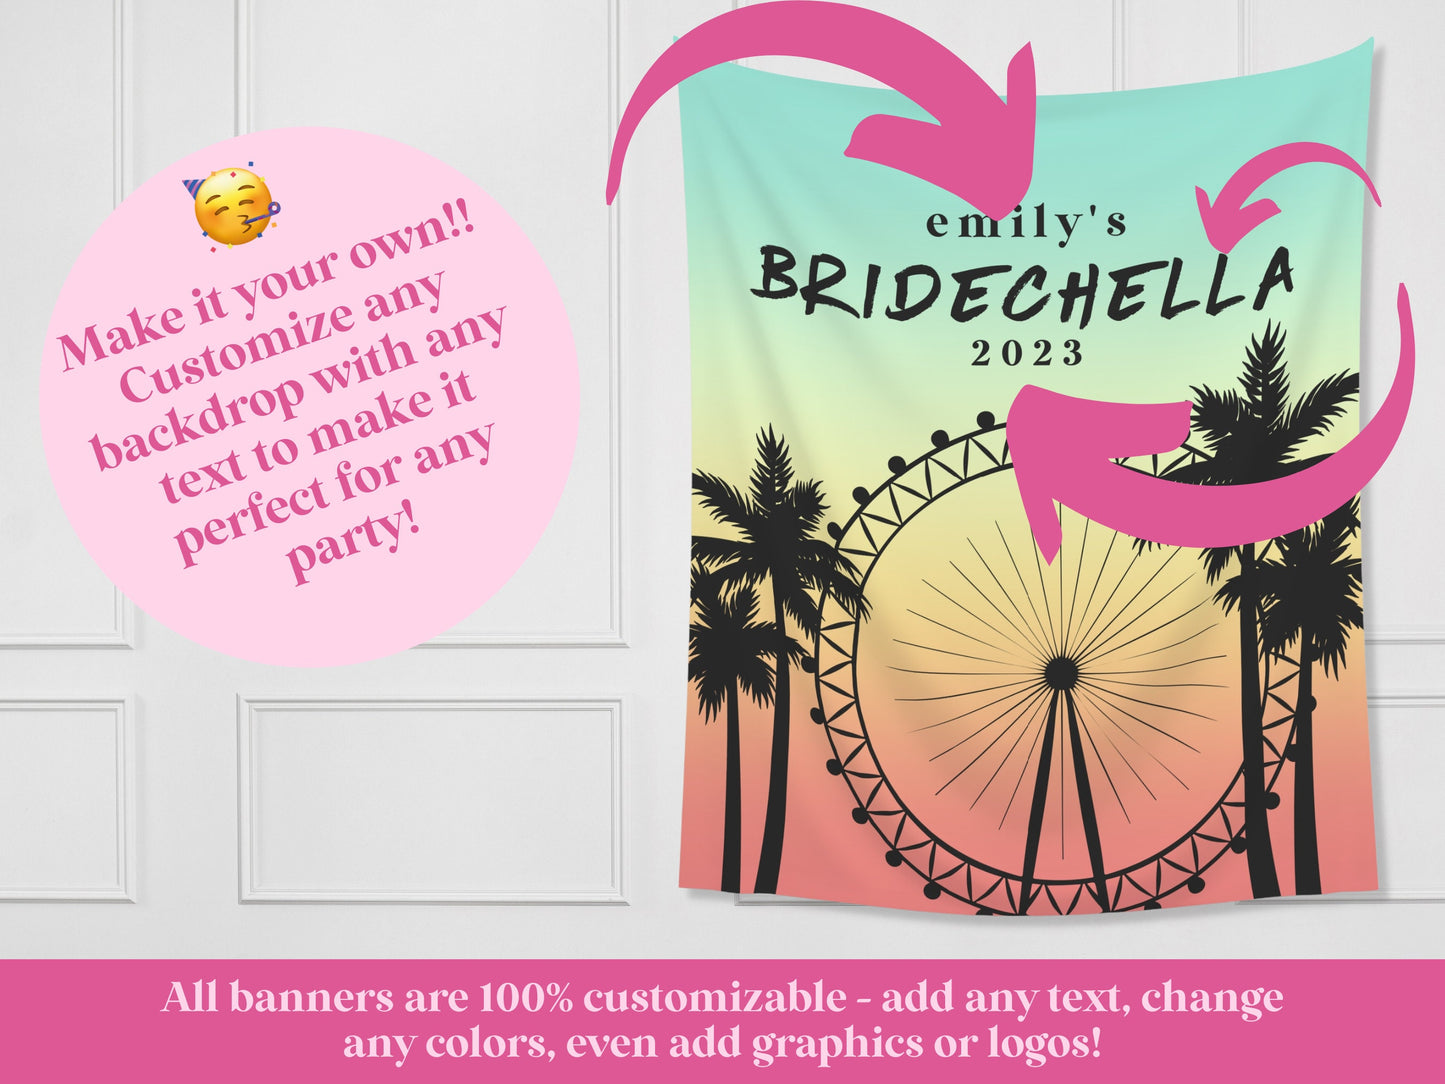 Bridechella Bachelorette Weekend Customizable Backdrop | Festival Bachelorette Party Personalized Banner | Bachelorette Pad Décor